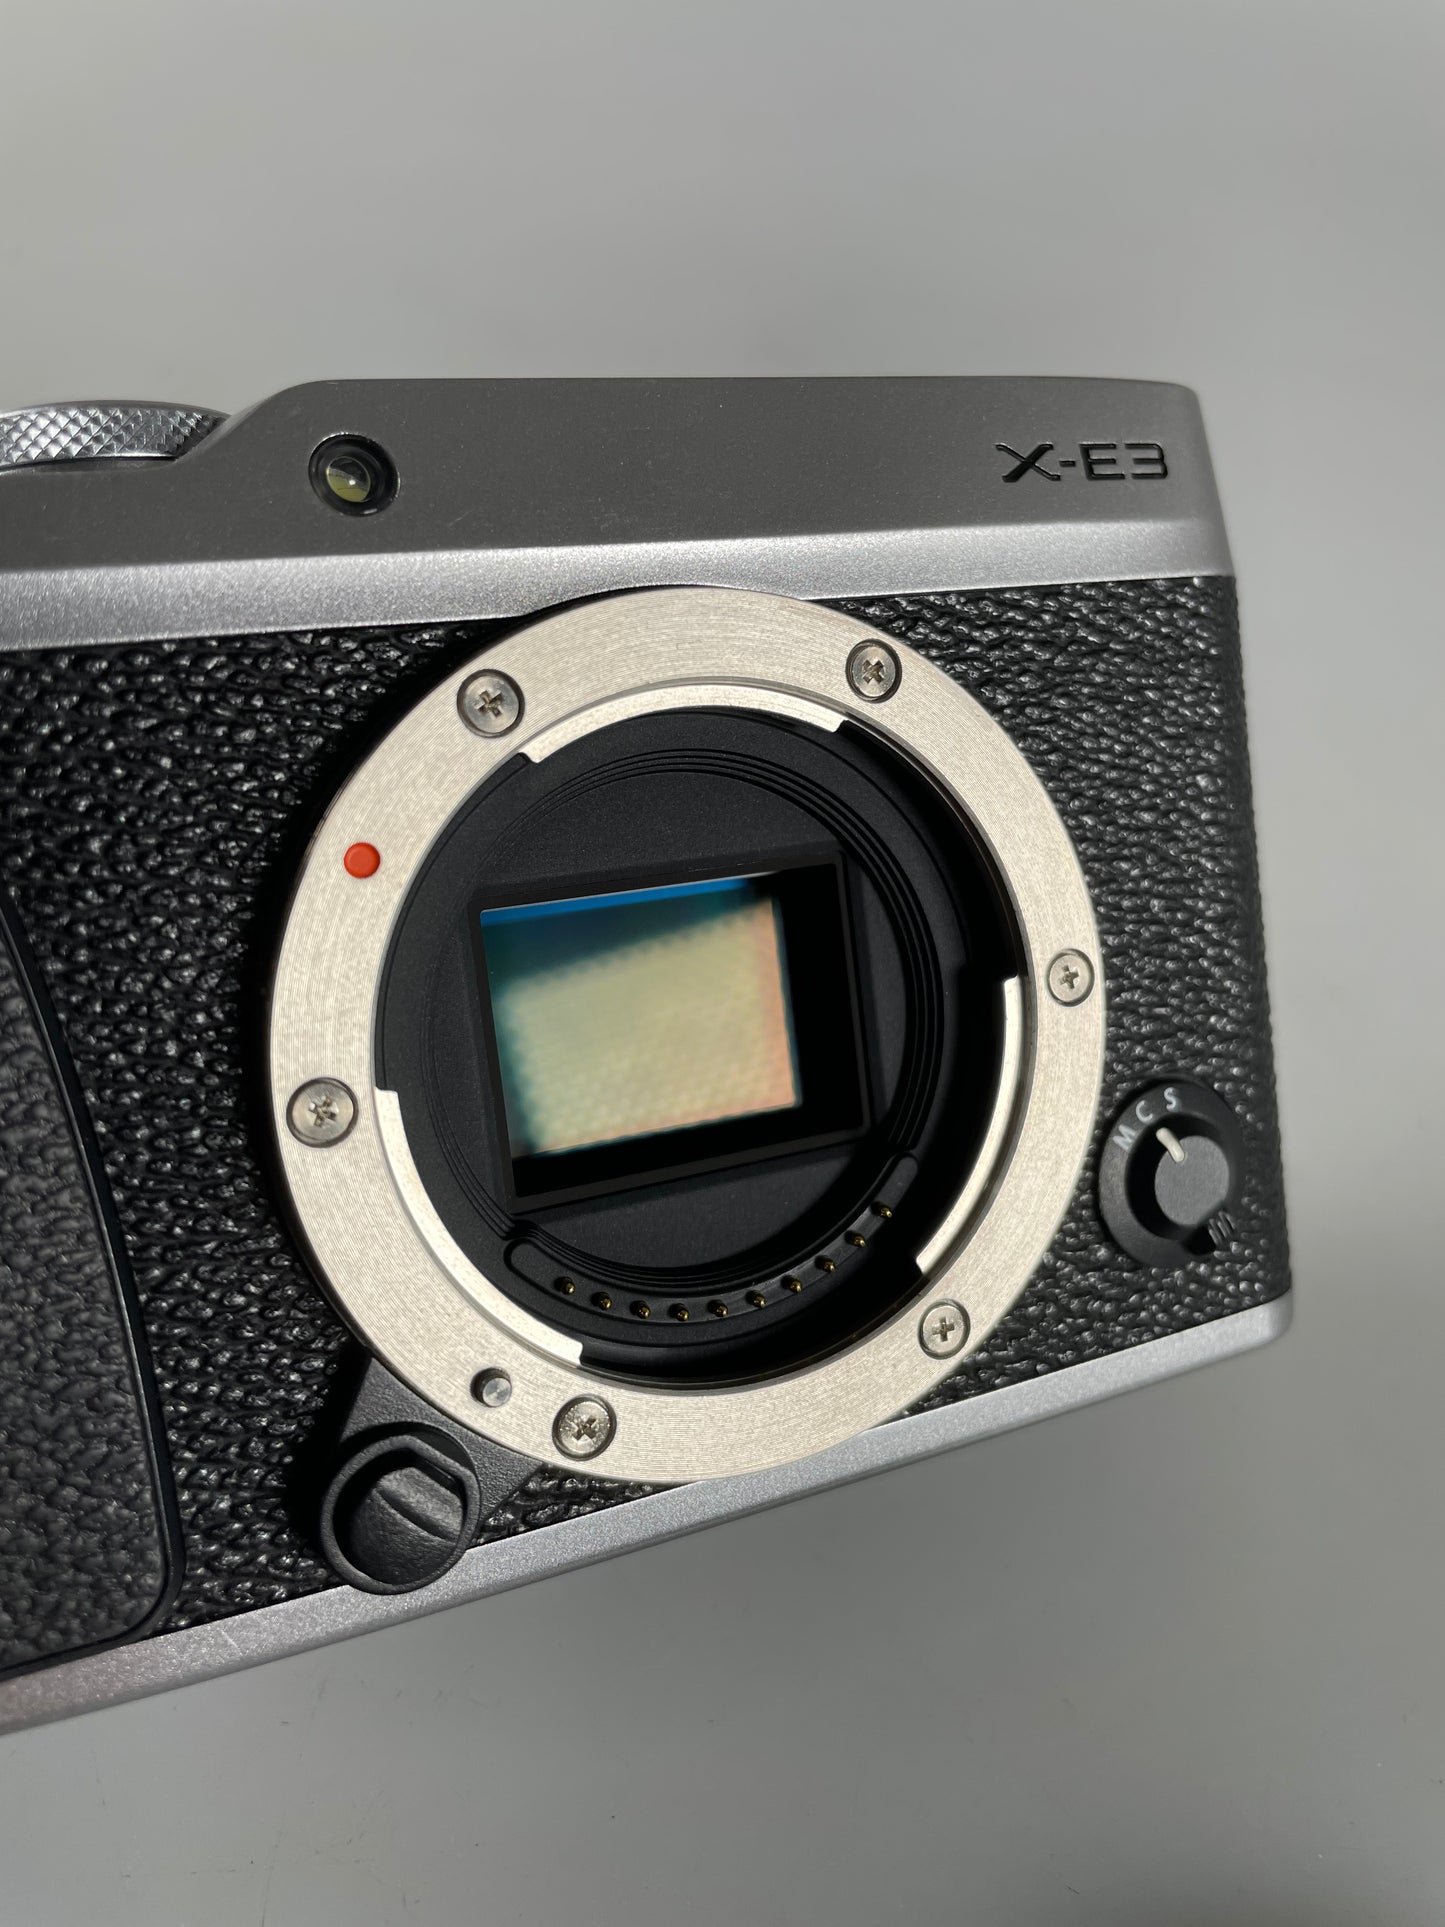 Fujifilm Fuji X-E3 24.3 MP Mirrorless Digital Camera Body (Silver)